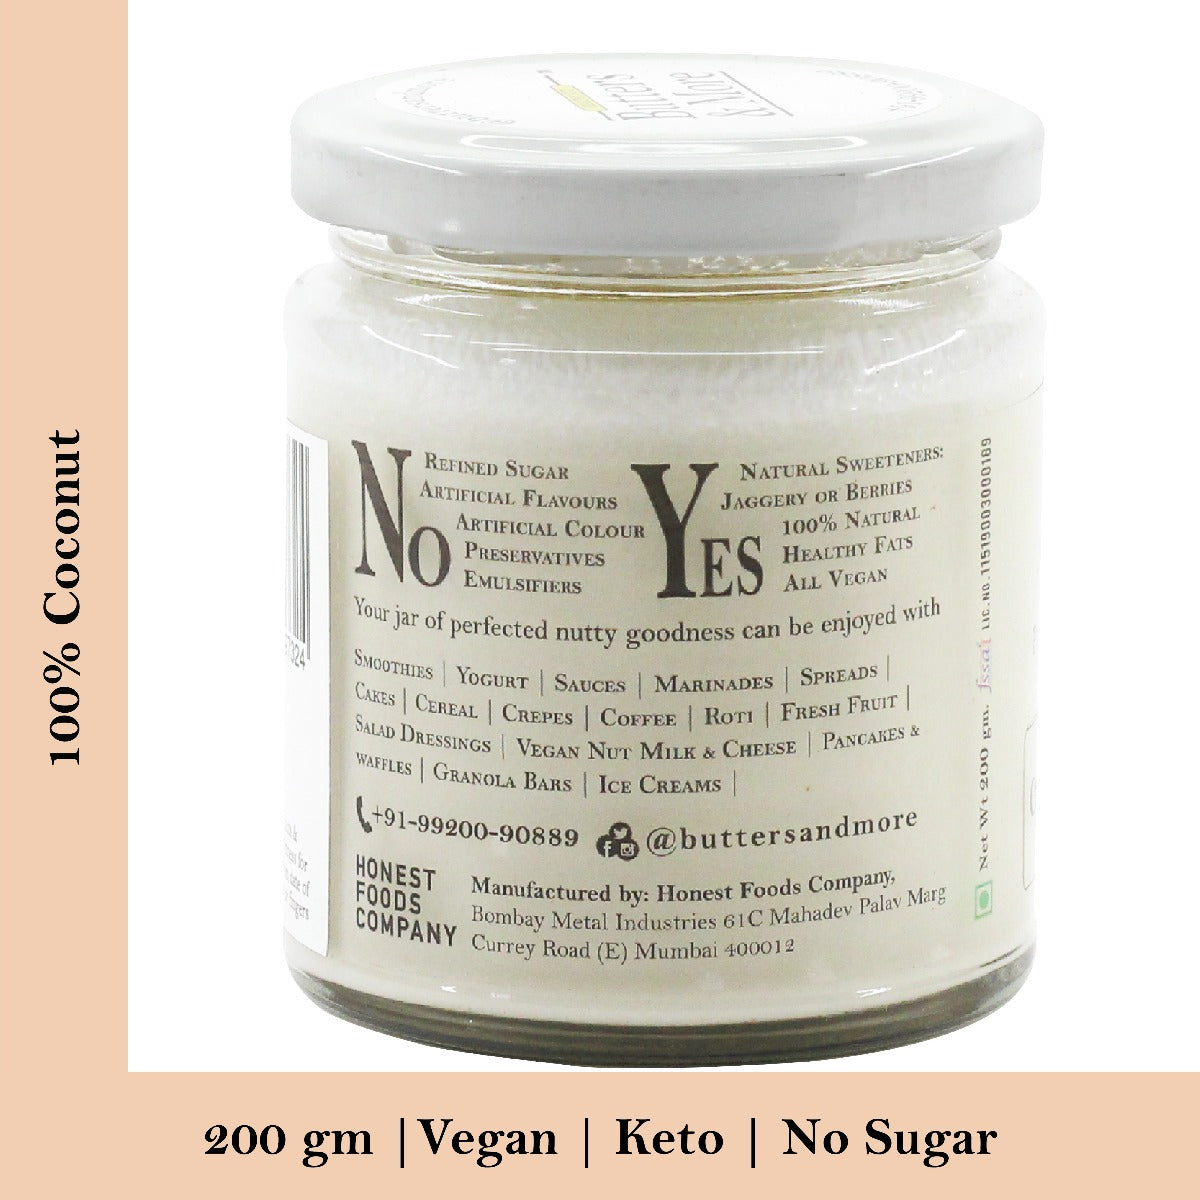 Coconut Butter- Natural & Vegan